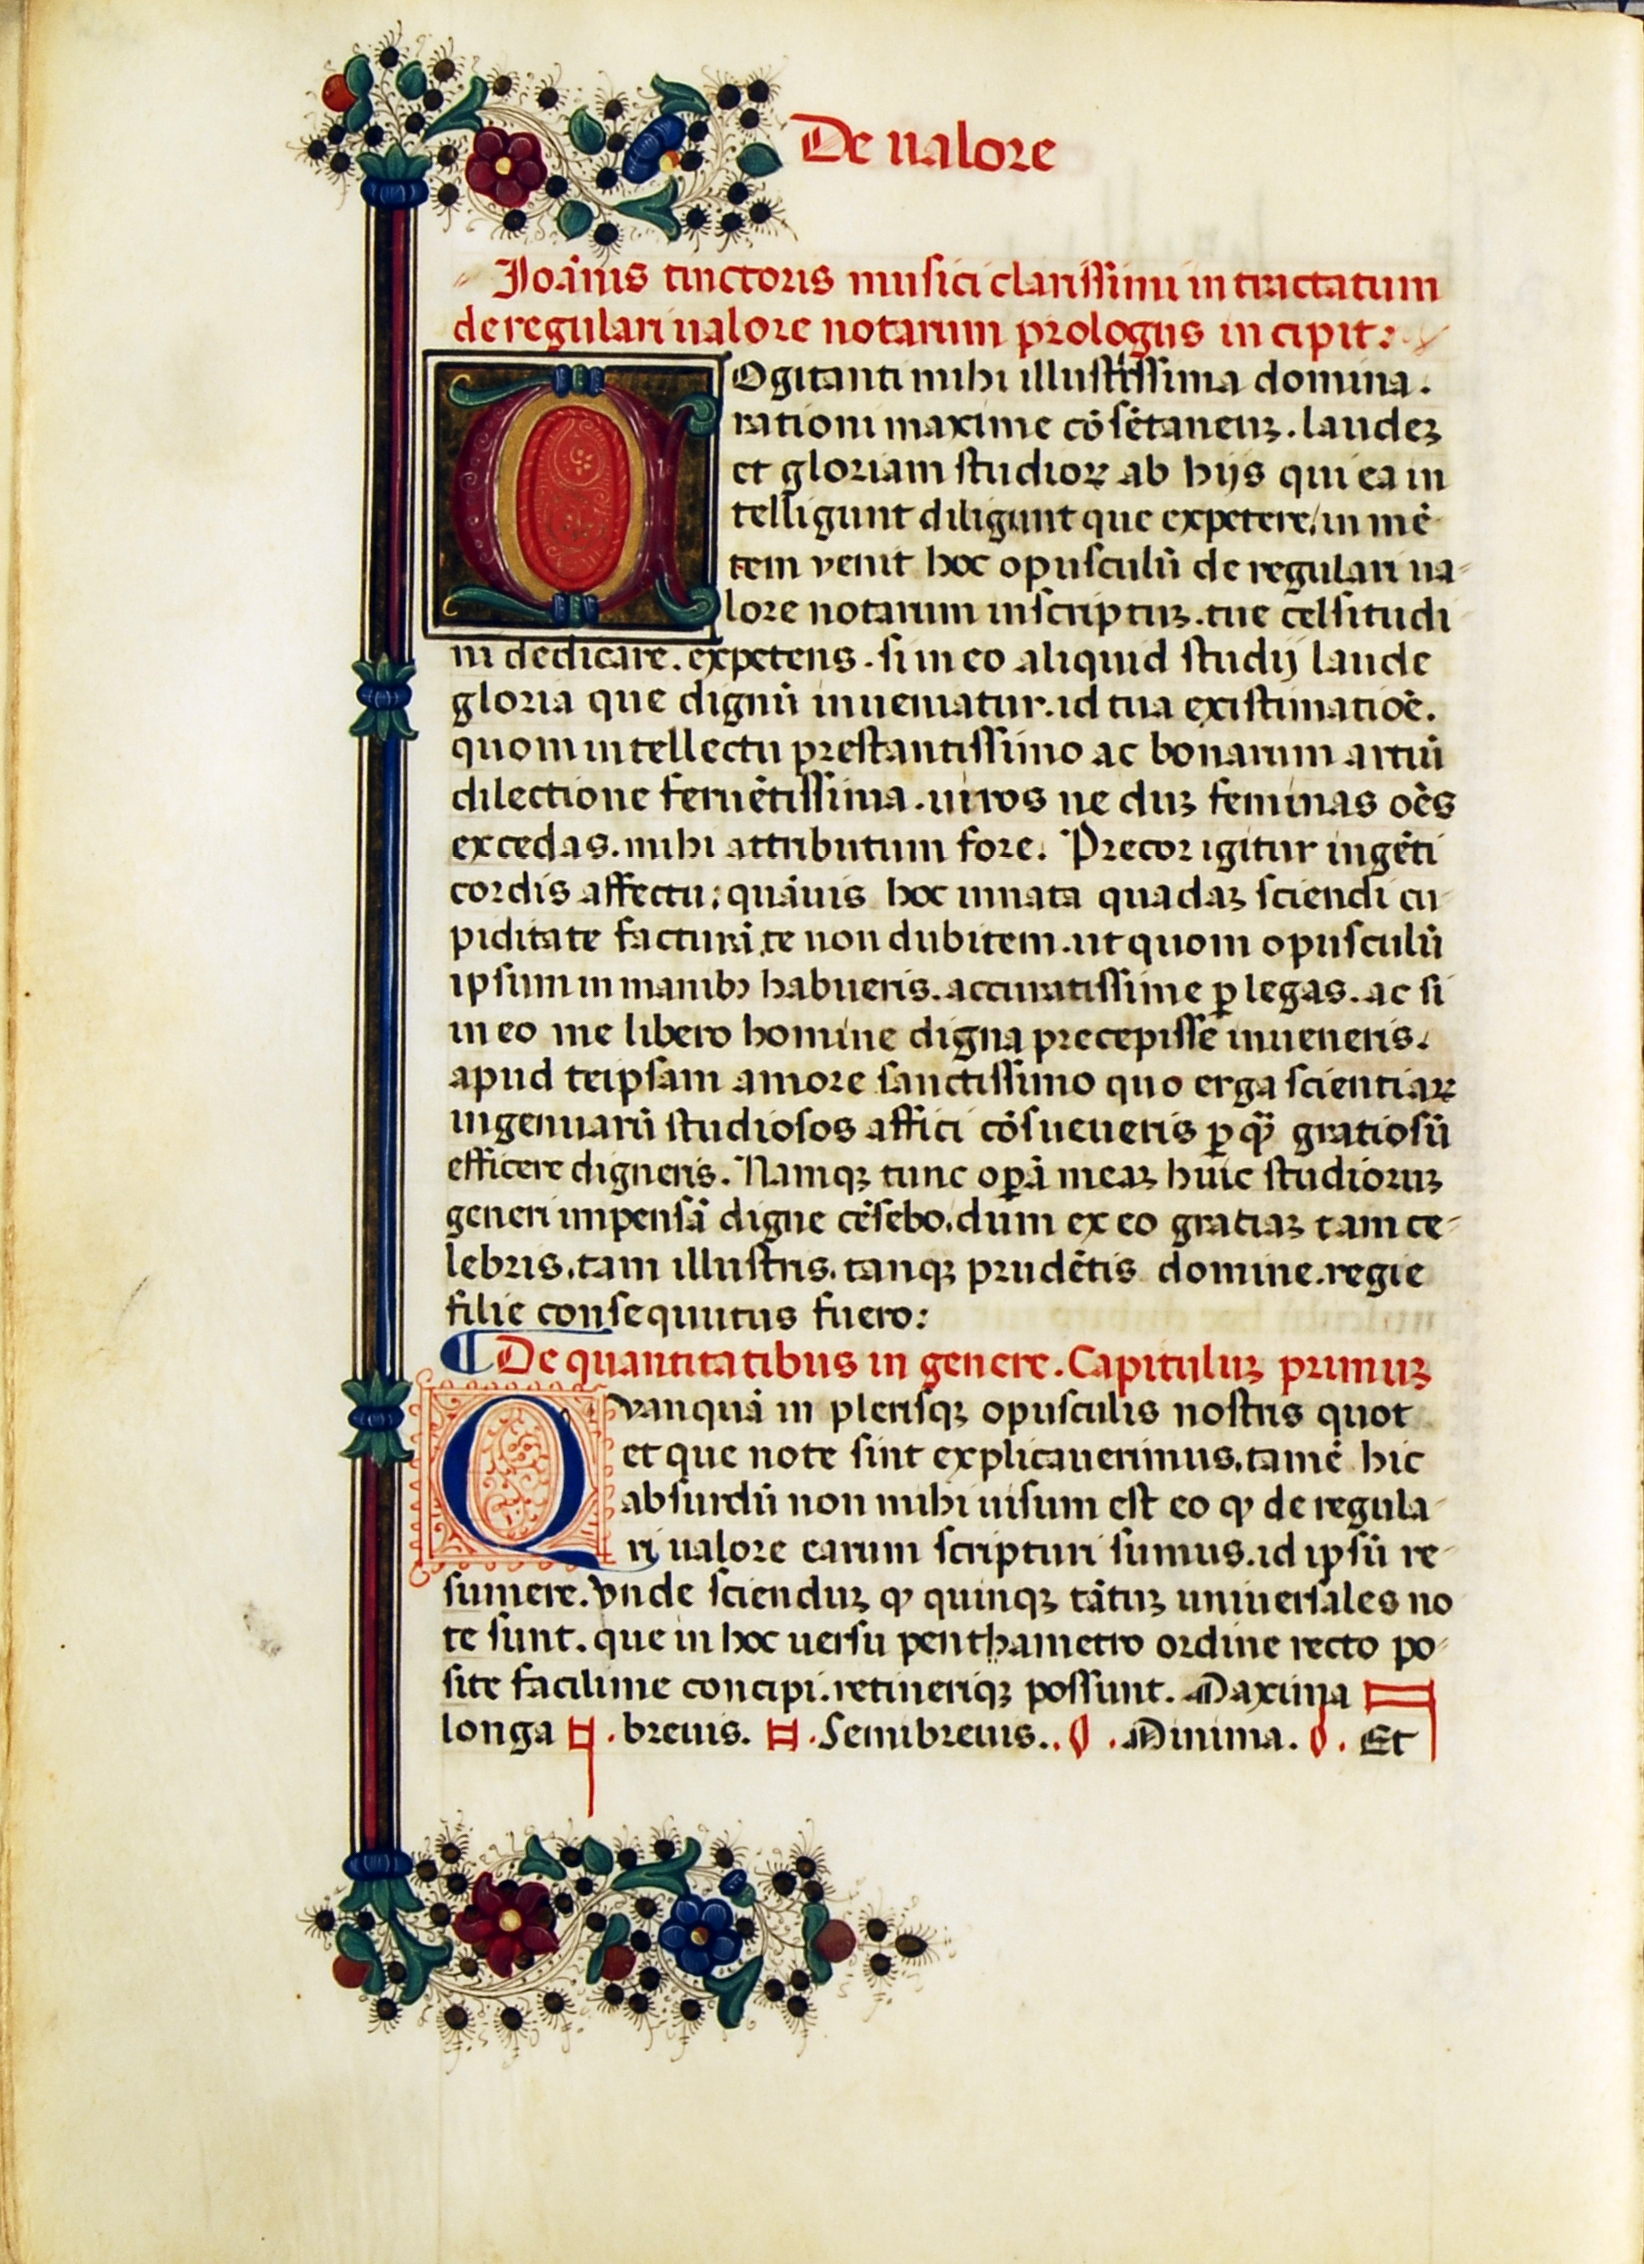 Bologna, Biblioteca Universitaria, MS 2573, fol. 52r. Source: Biblioteca Universitaria, Bologna.